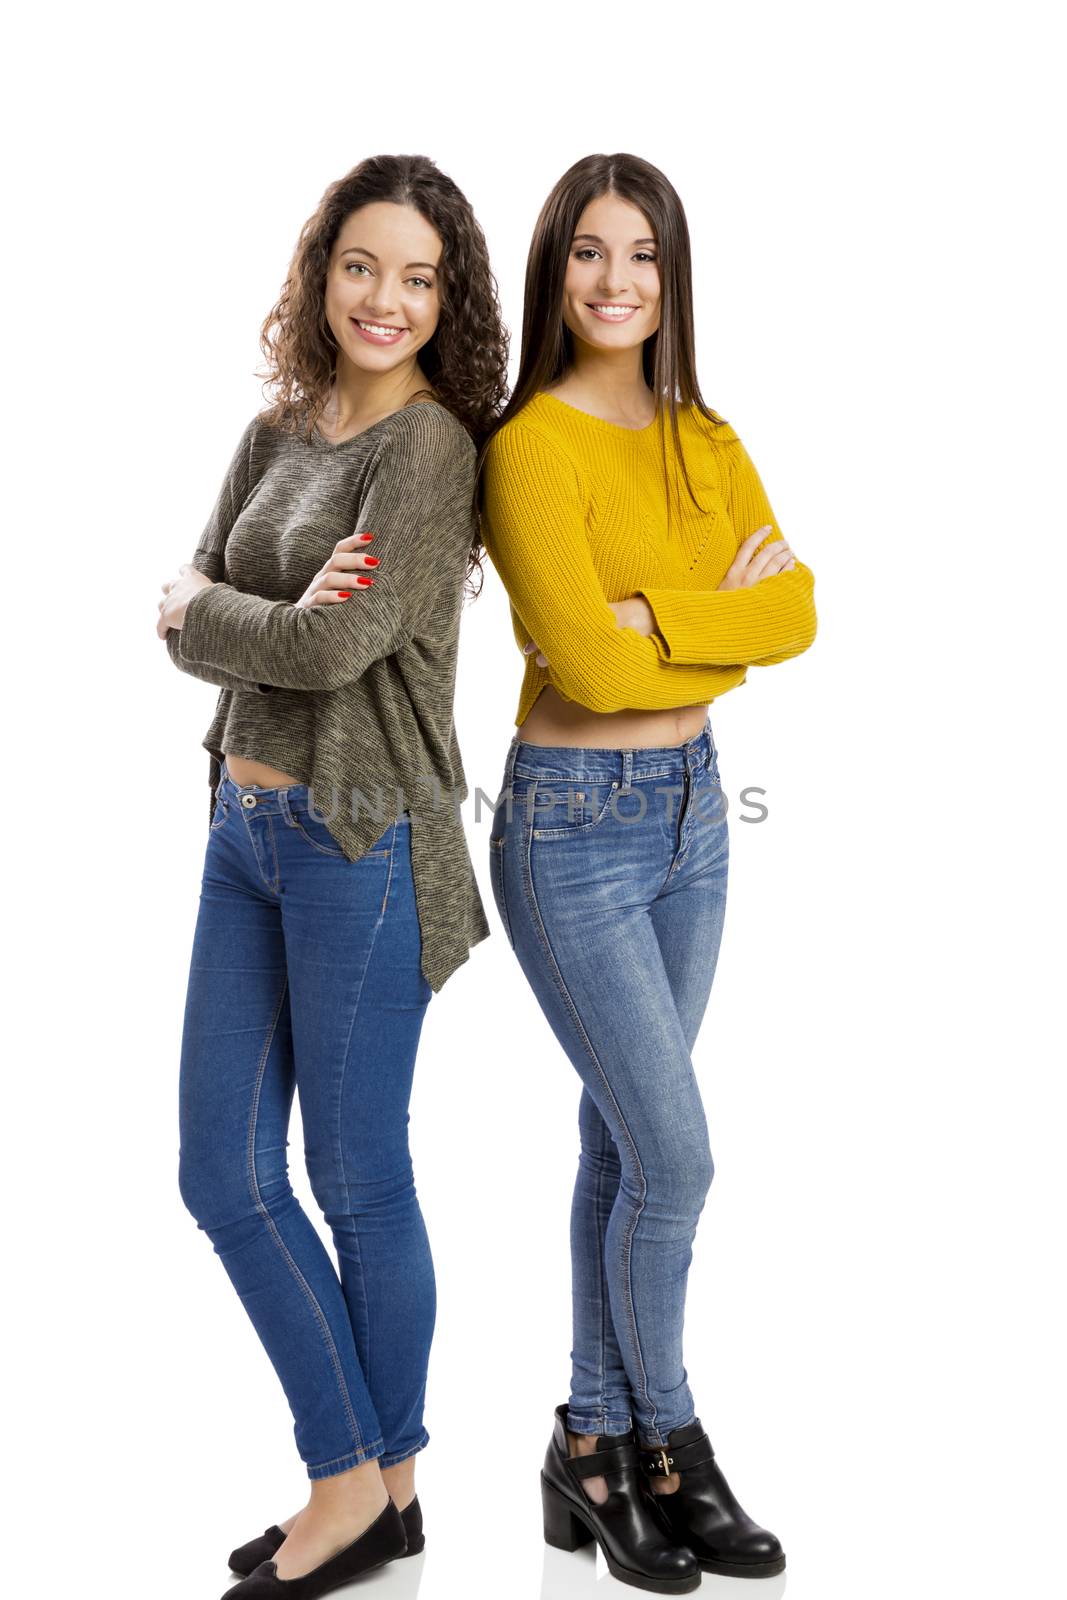 Studio portrait of two beautiful girls smiling